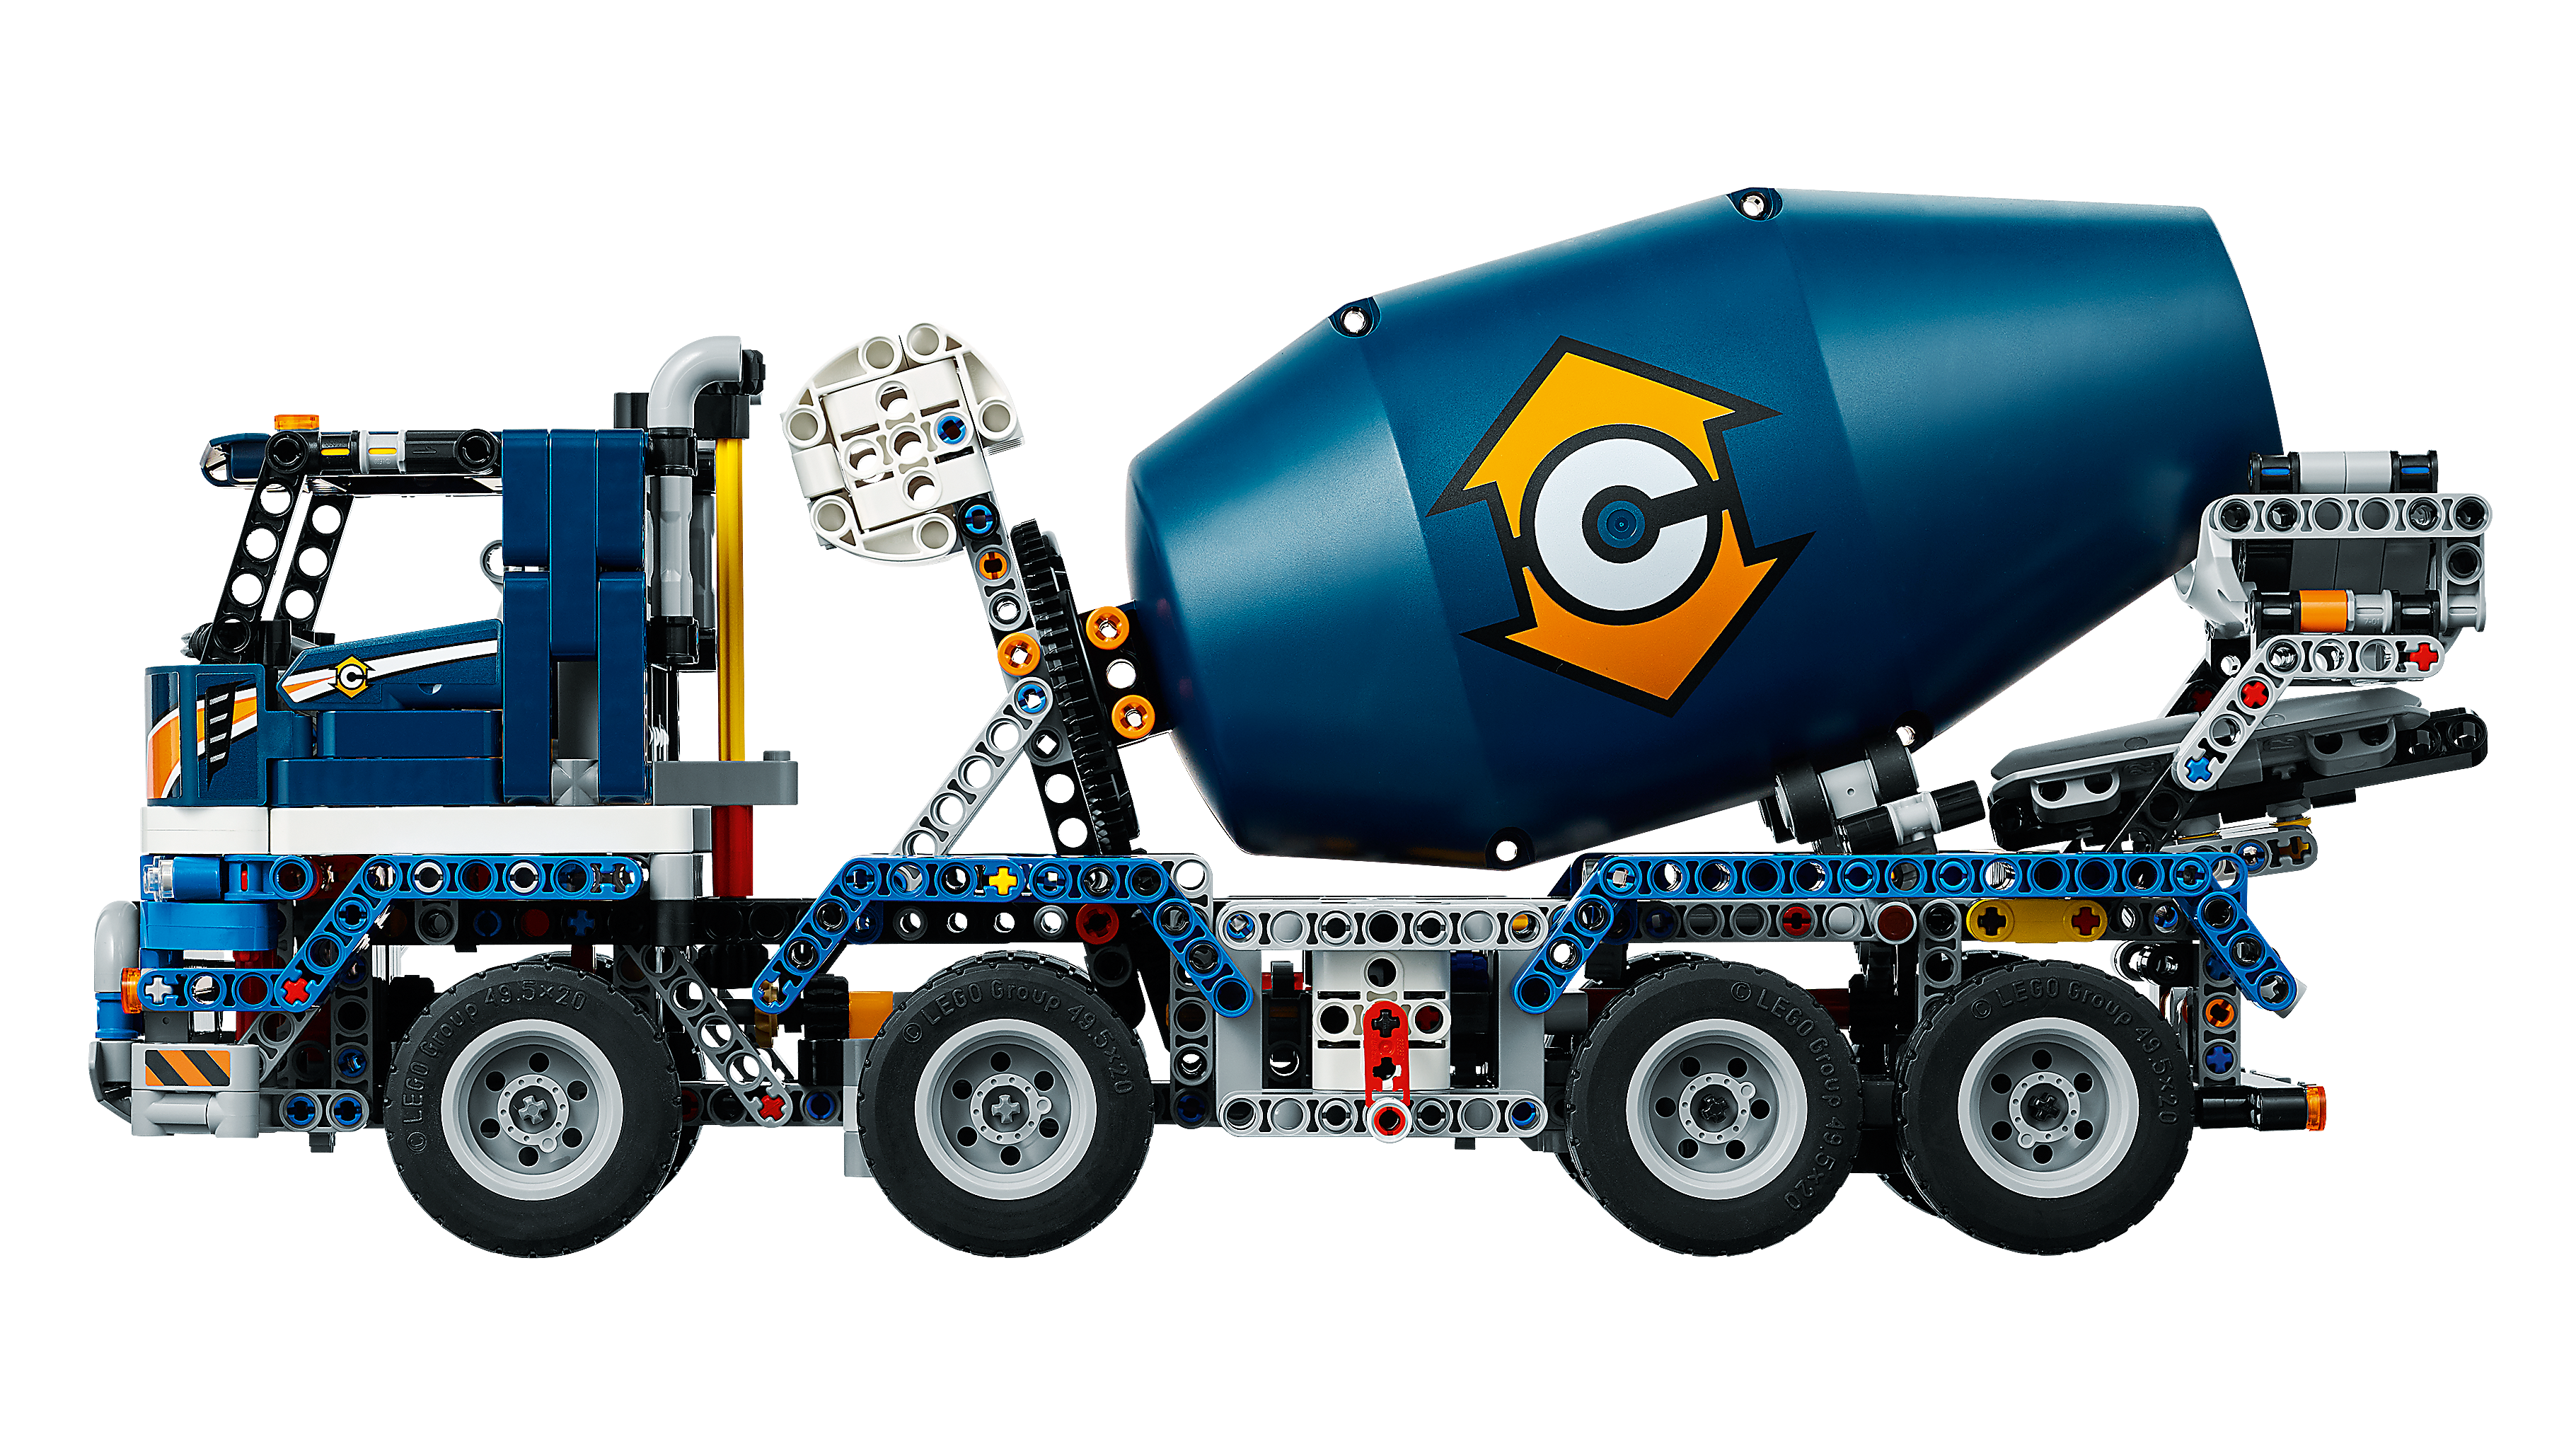 LEGO Technic 42112 Betonmischer-LKW NEU /OVP 